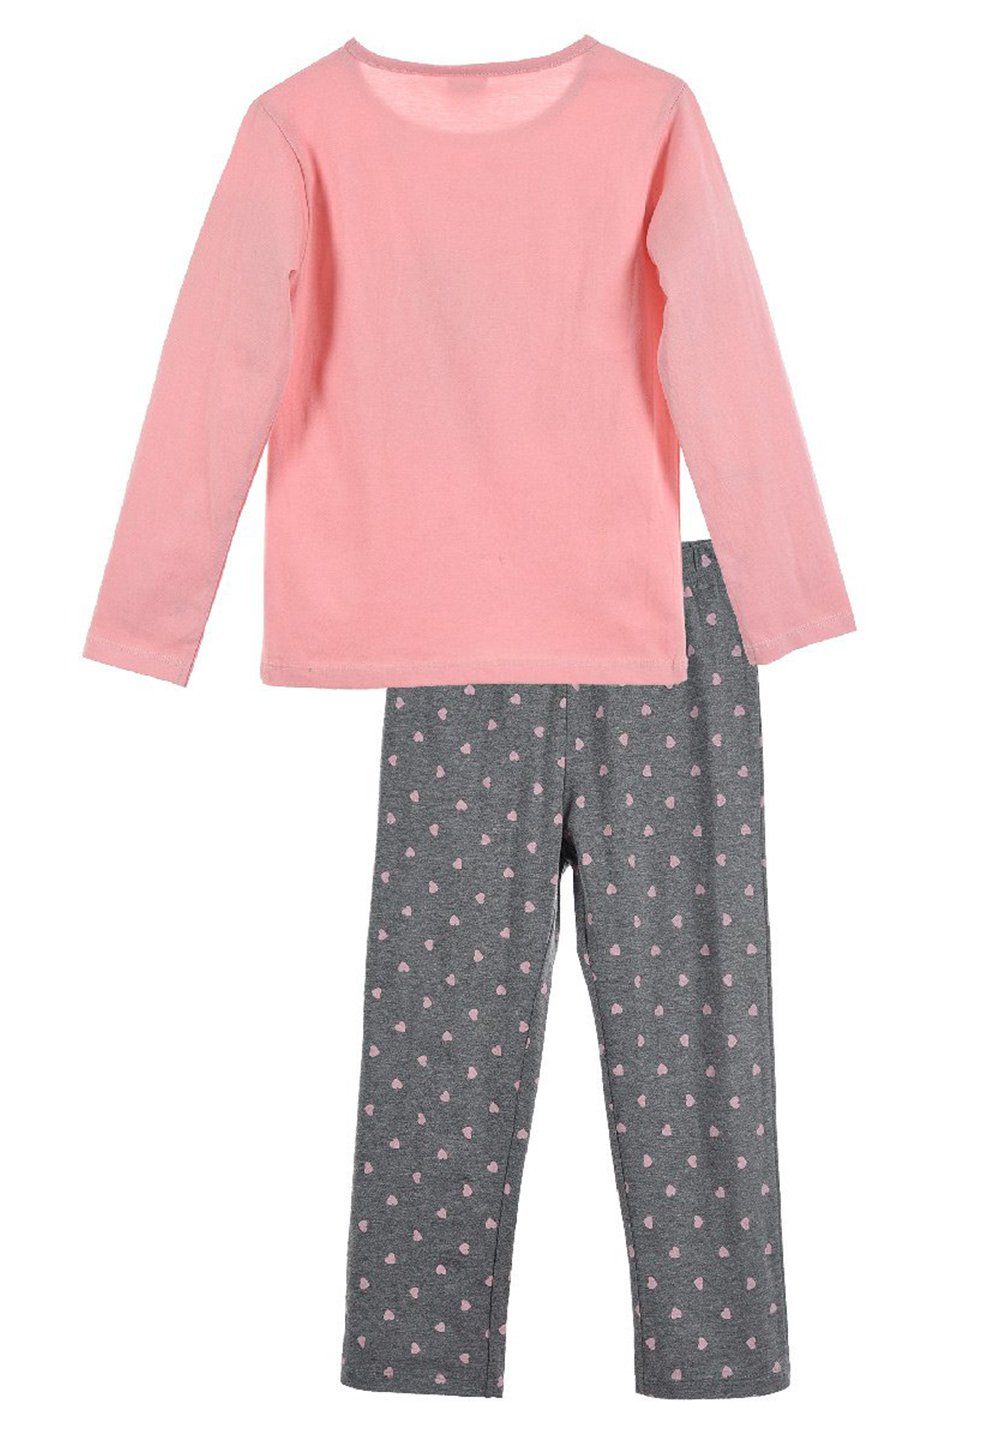 Pyjama Minnie Shirt Kinder Disney Langarm Maus Mini Mouse Pink Mädchen Schlafanzug Schlafanzug Kinder Schlaf-Hose +